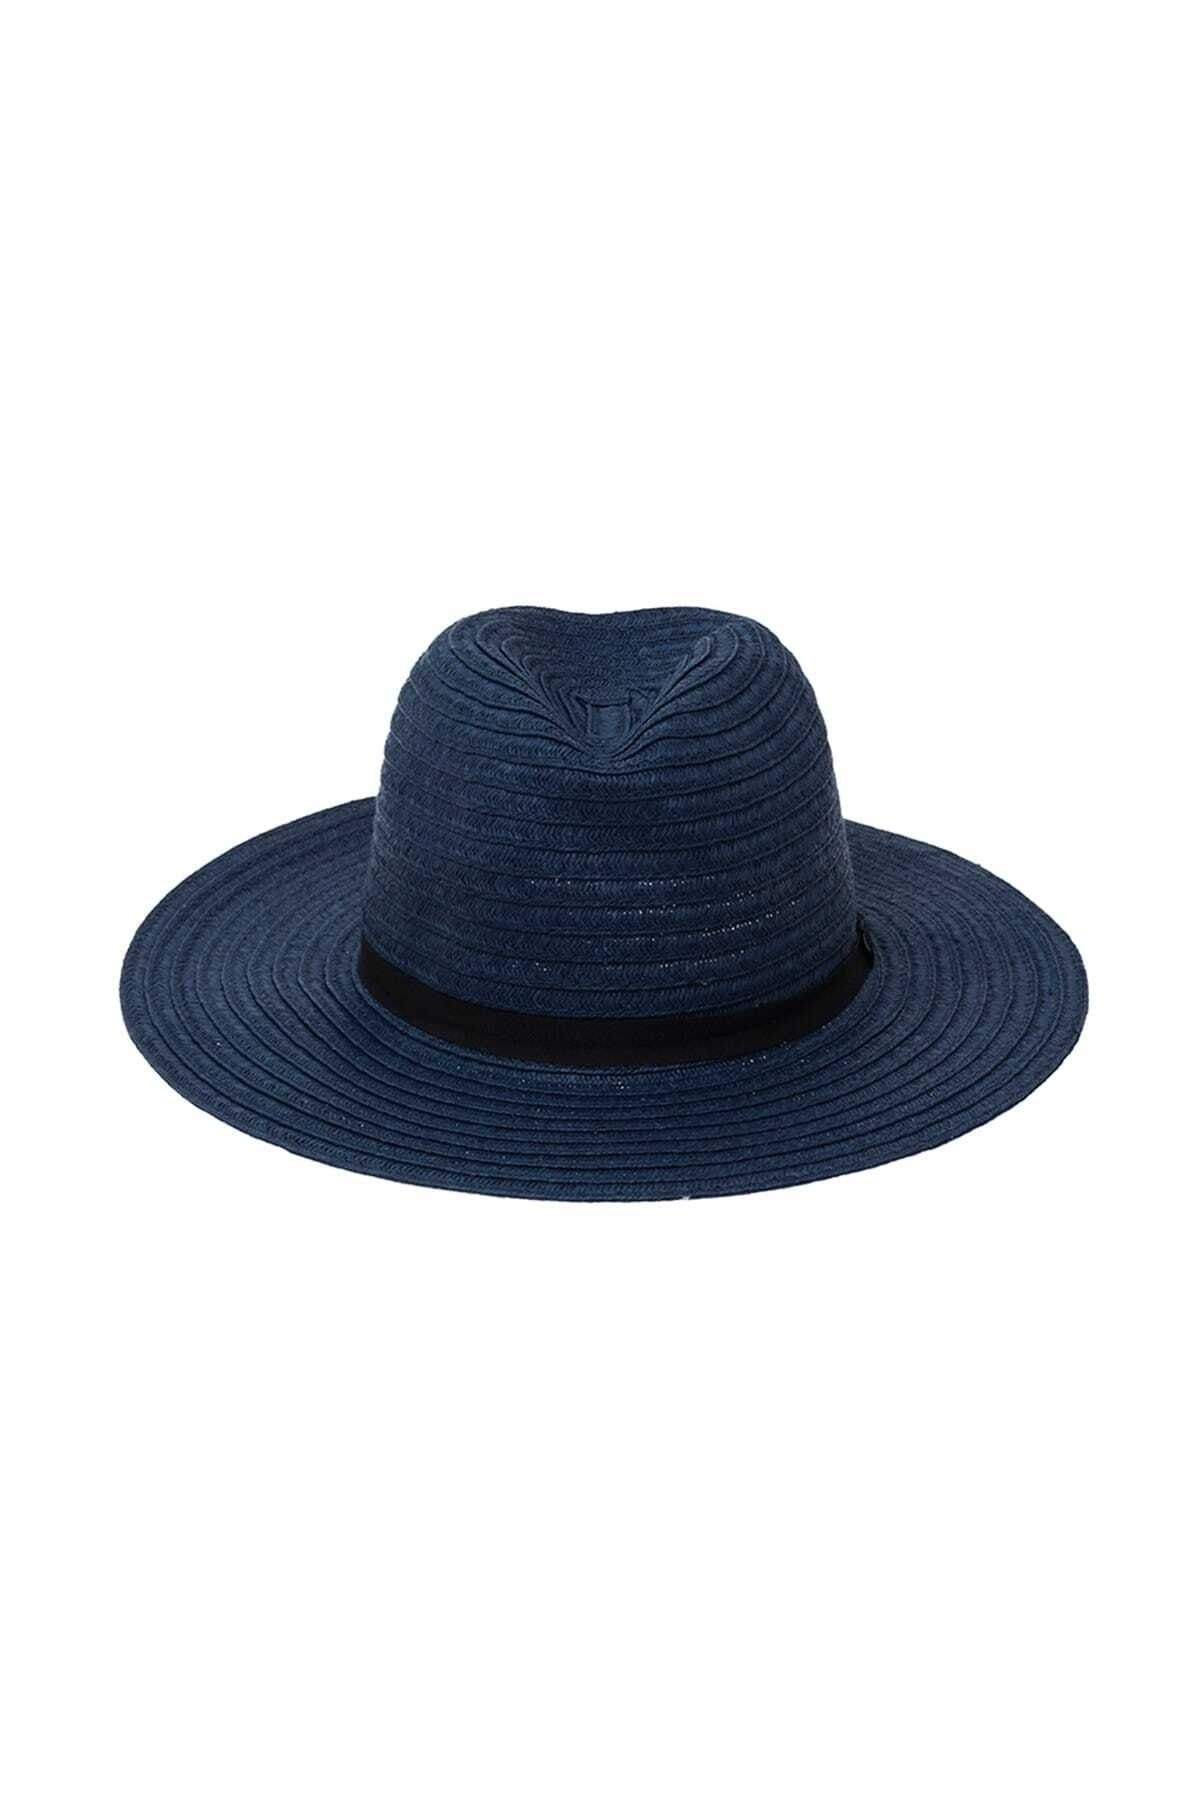 Coquet Kadın Dina Hasır Şapka 18yg5u36l018/ Yazlık Şapka